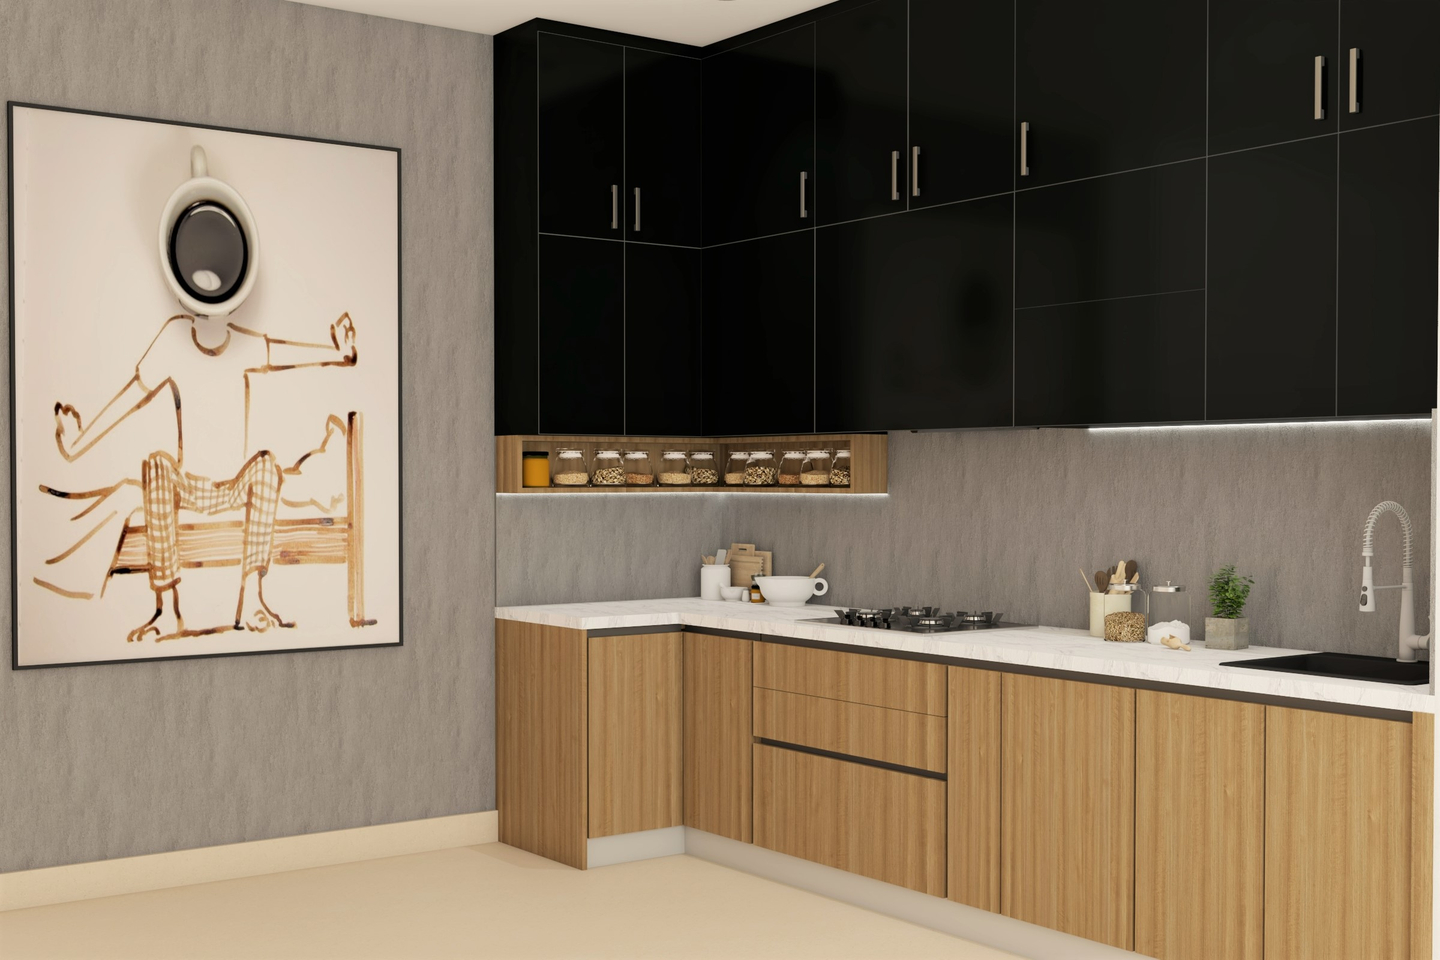 Wood And Black Shutters Kitchen Design - Livspace